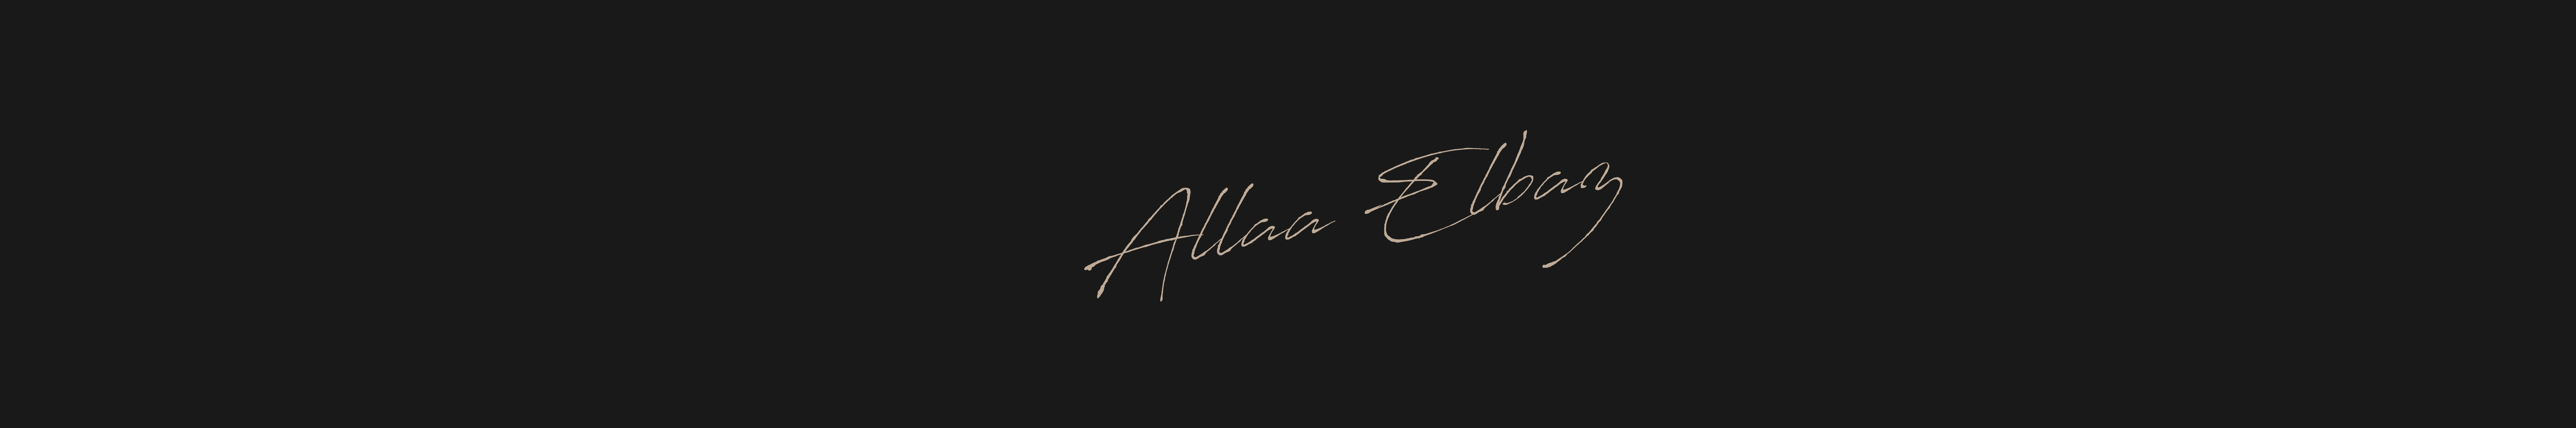 Alaa Elbaz's profile banner